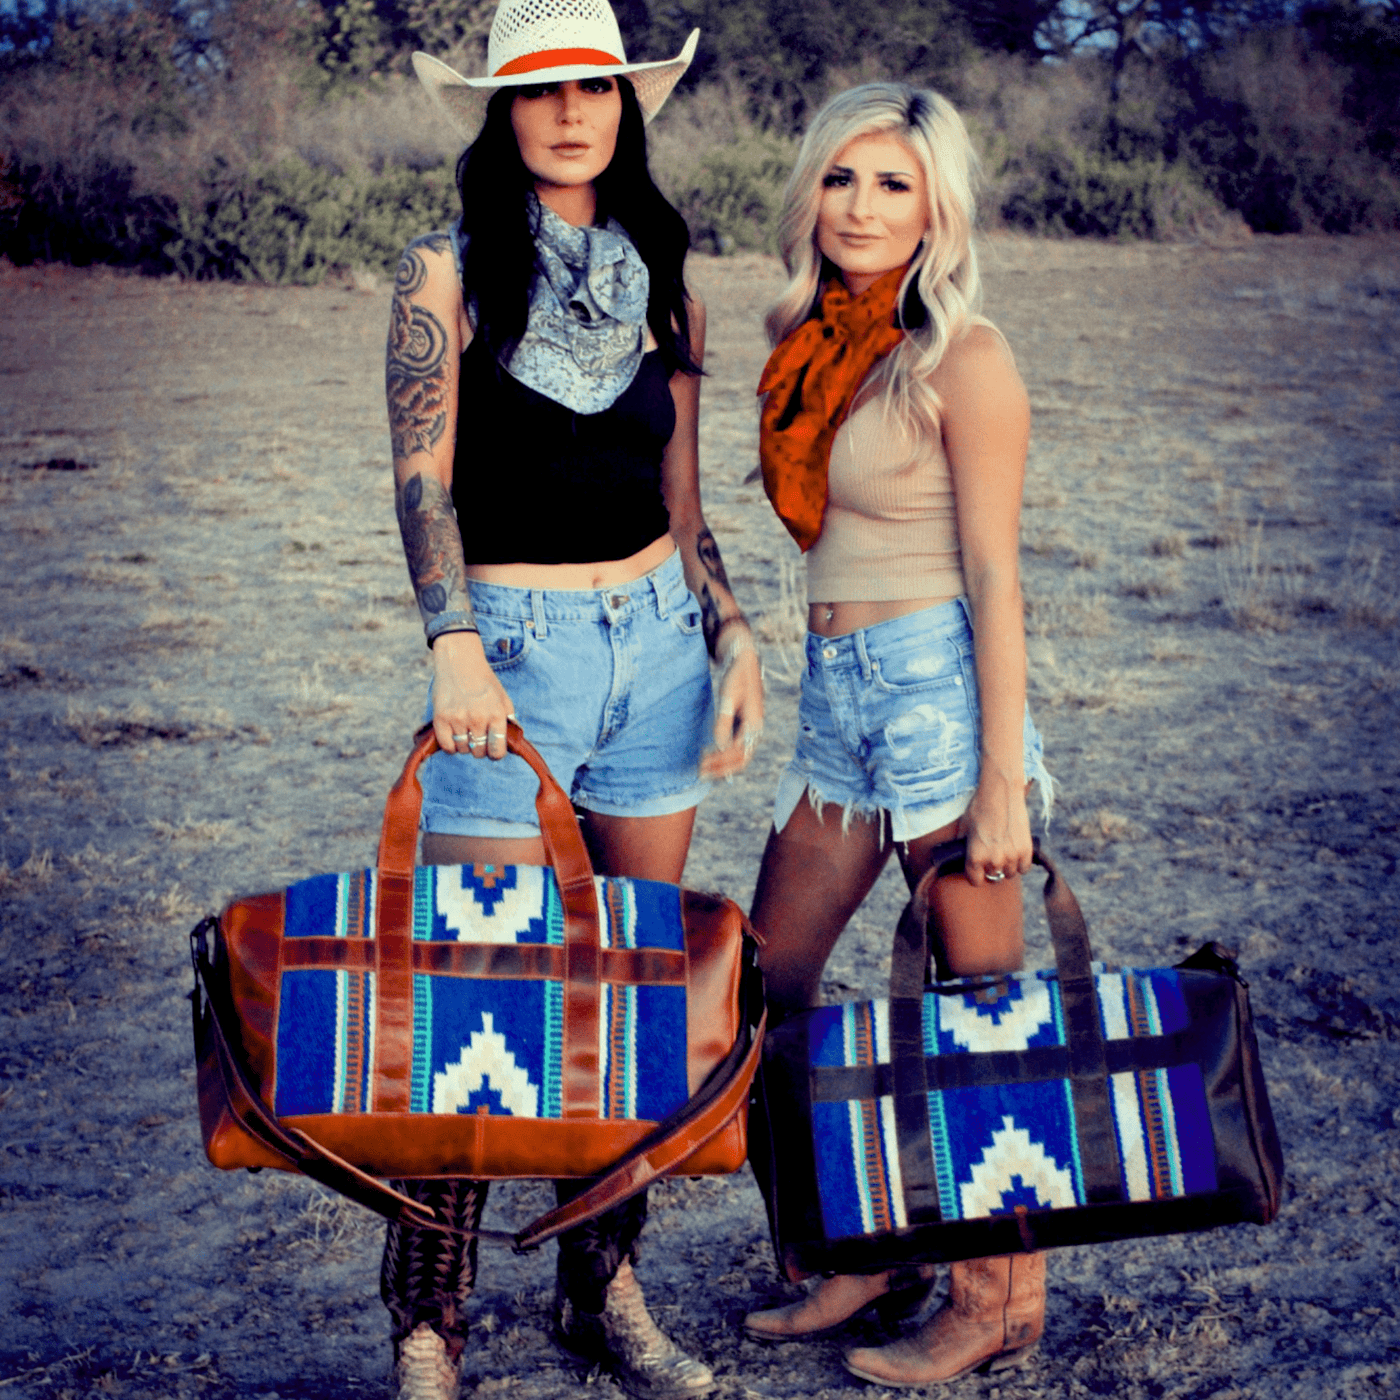 Dakota Southwestern Saddle Blanket Aztec Weekender Leather Duffel Bag - Ranch Junkie Mercantile LLC